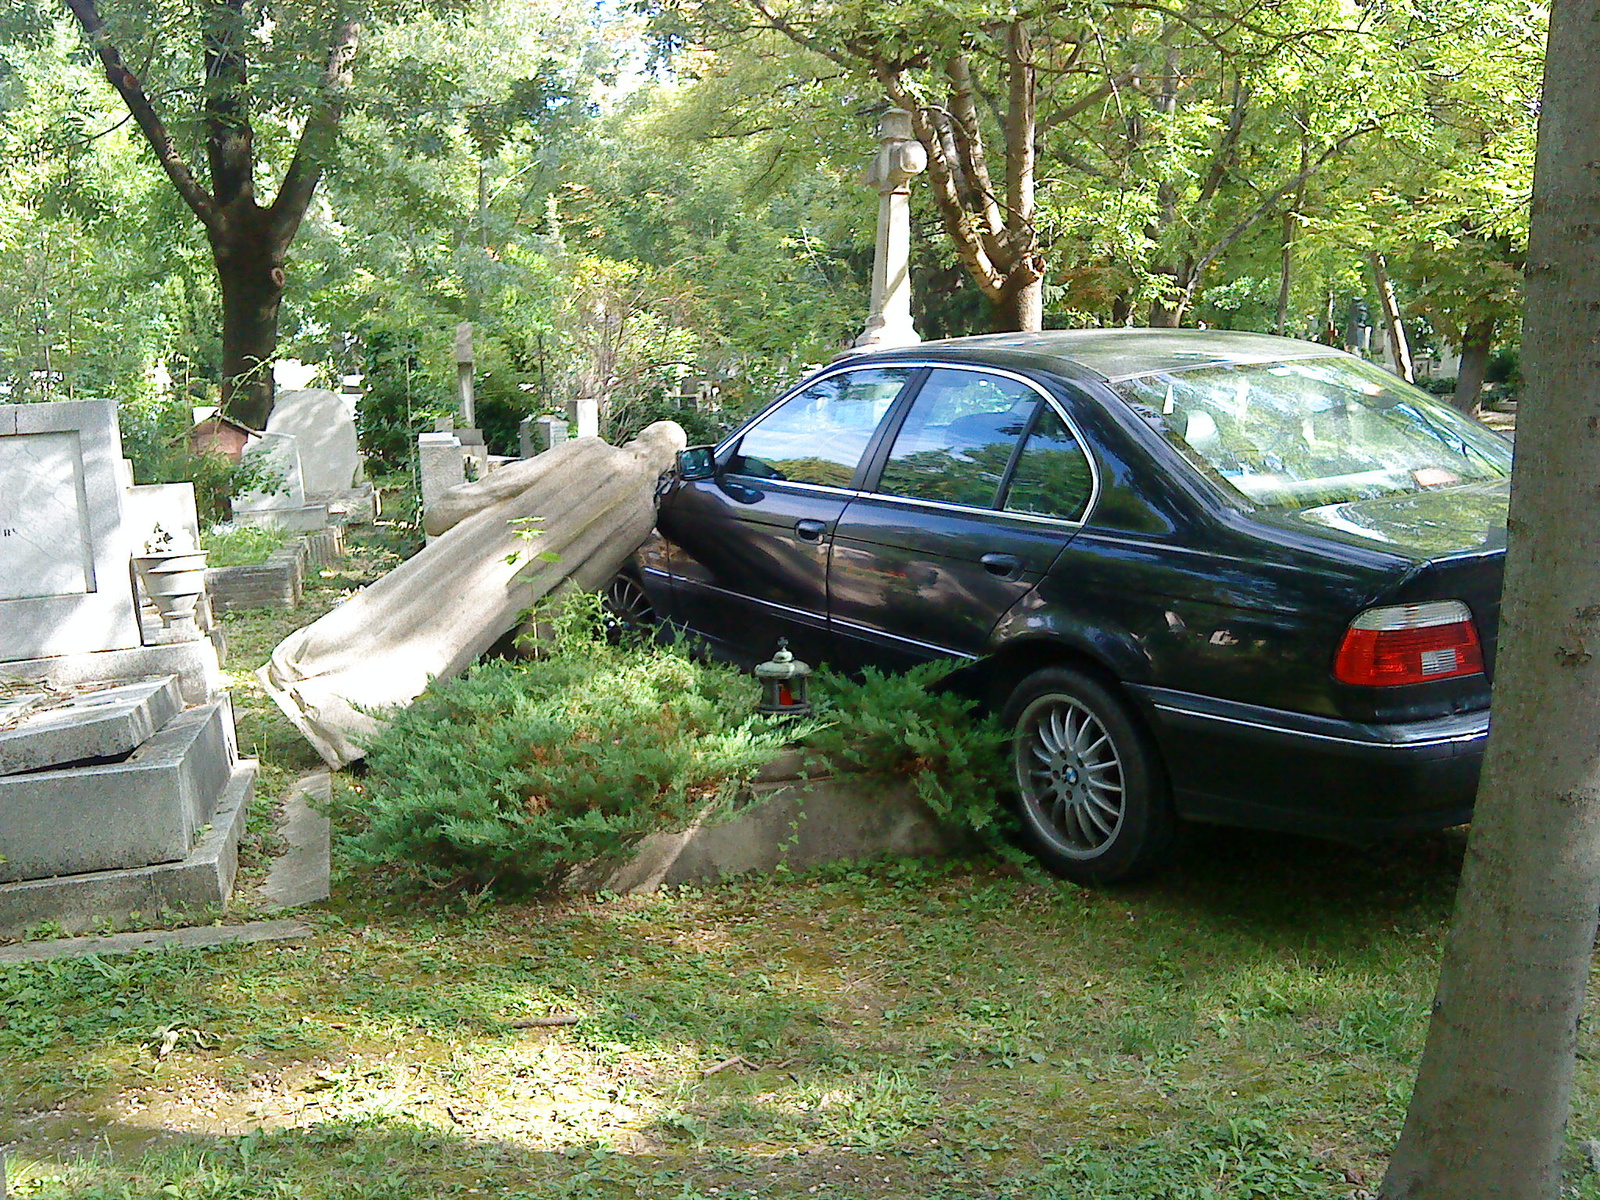 BMW a farkasréti temetőben 1